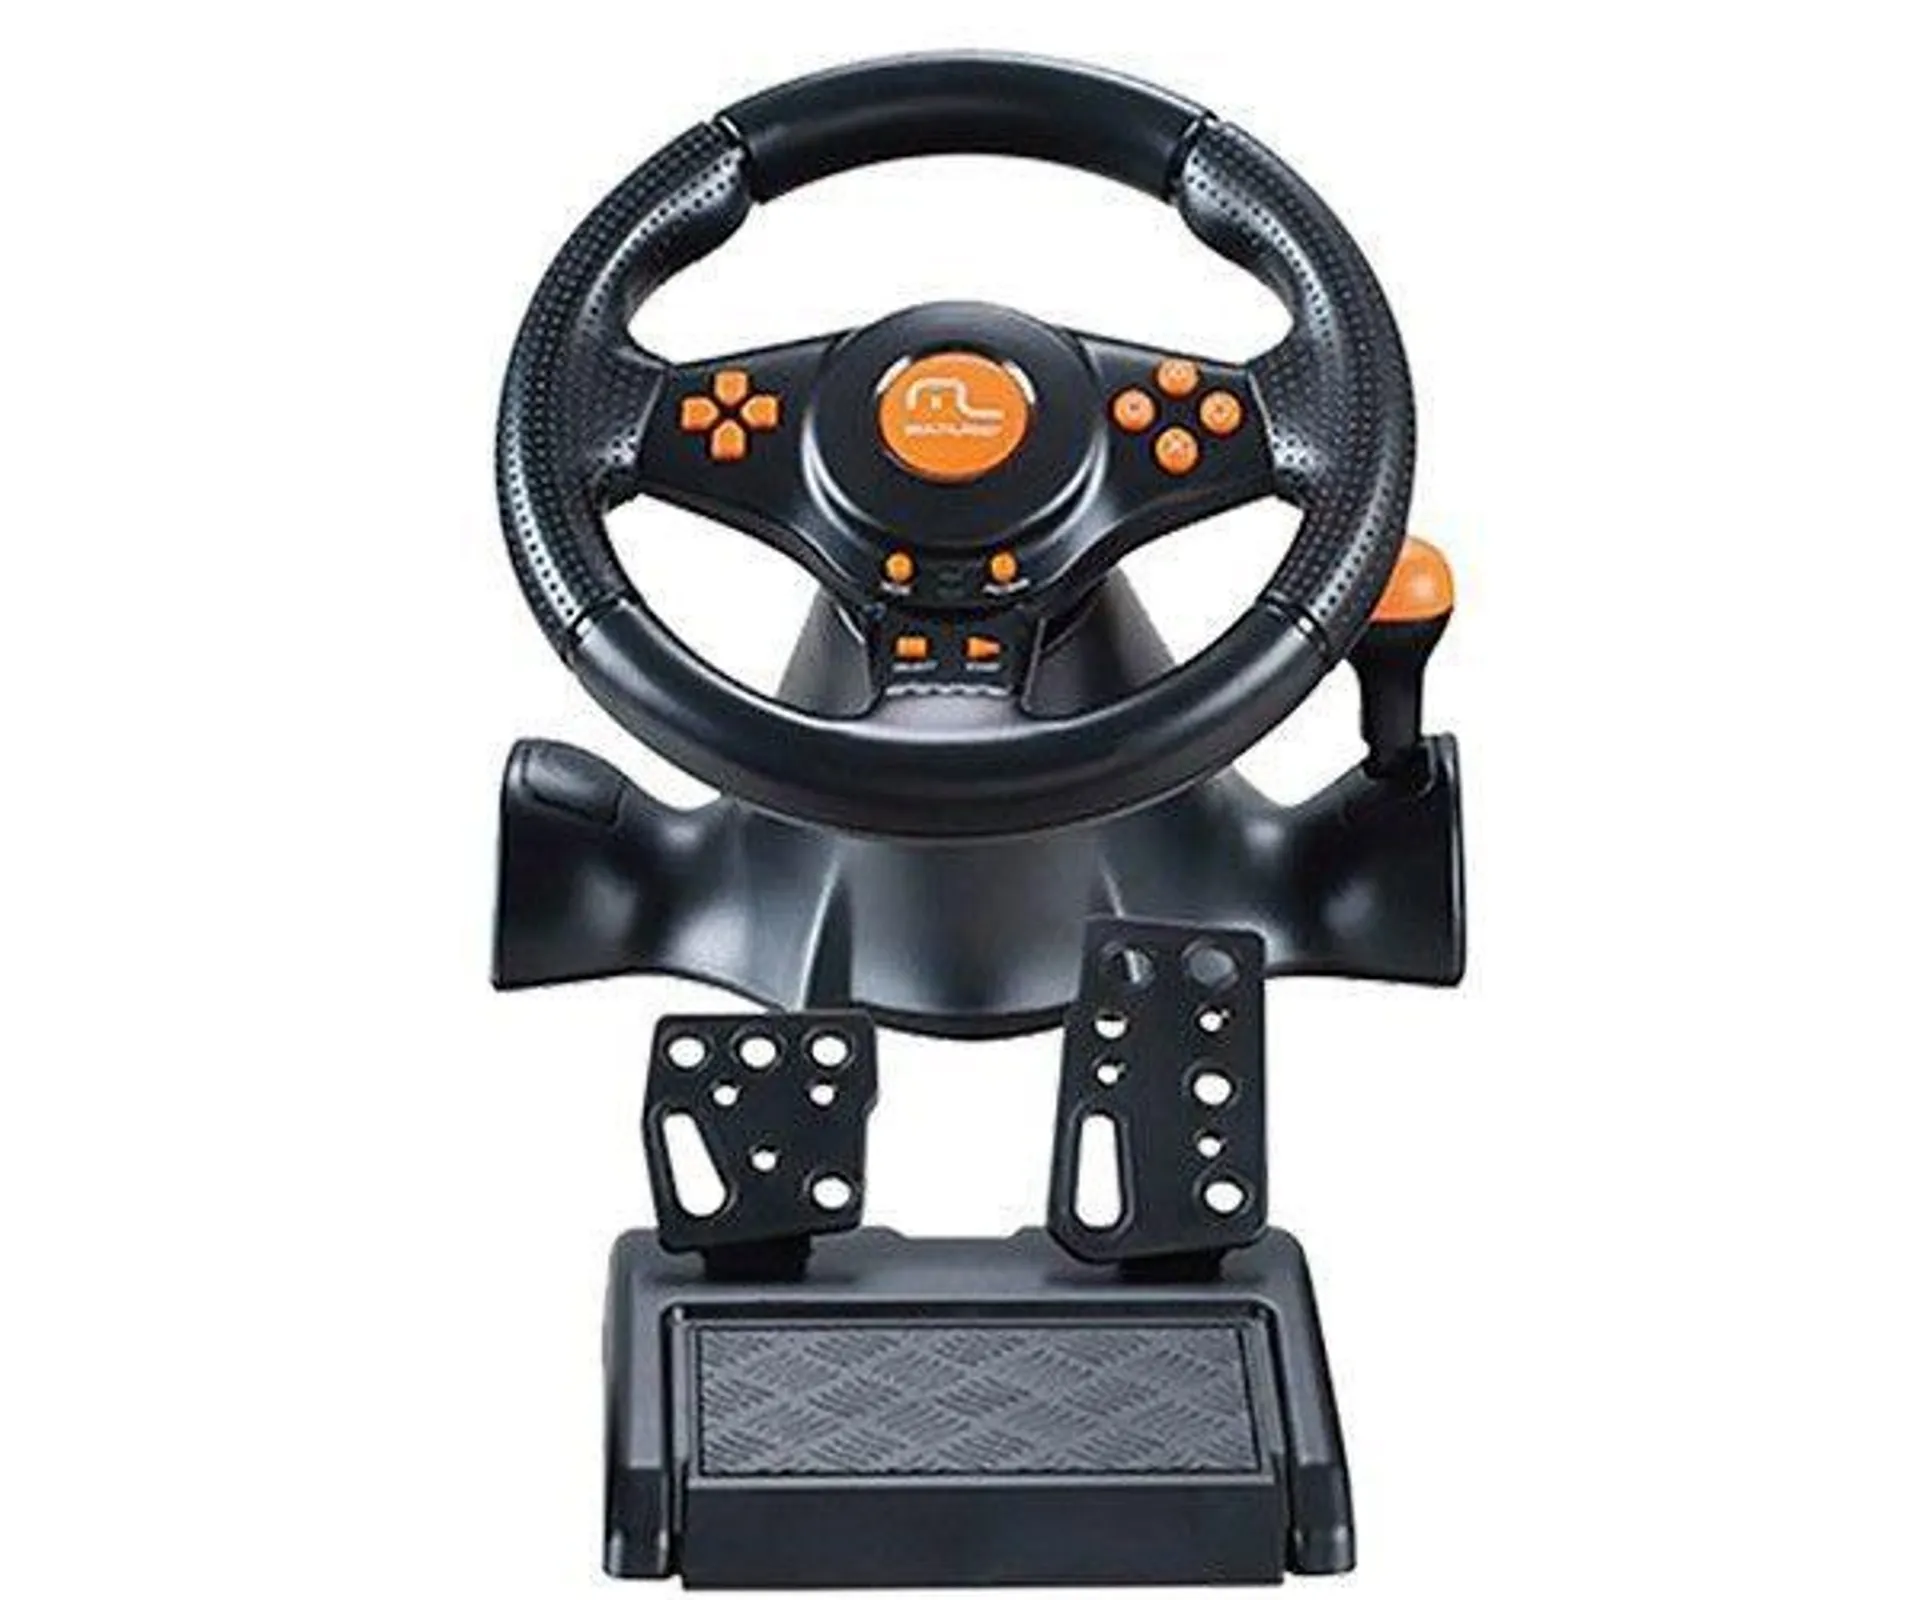 Volante Racer Multi 3x1 PS2 PS3 E PC Com Marcha Preto/Laranja, JS074